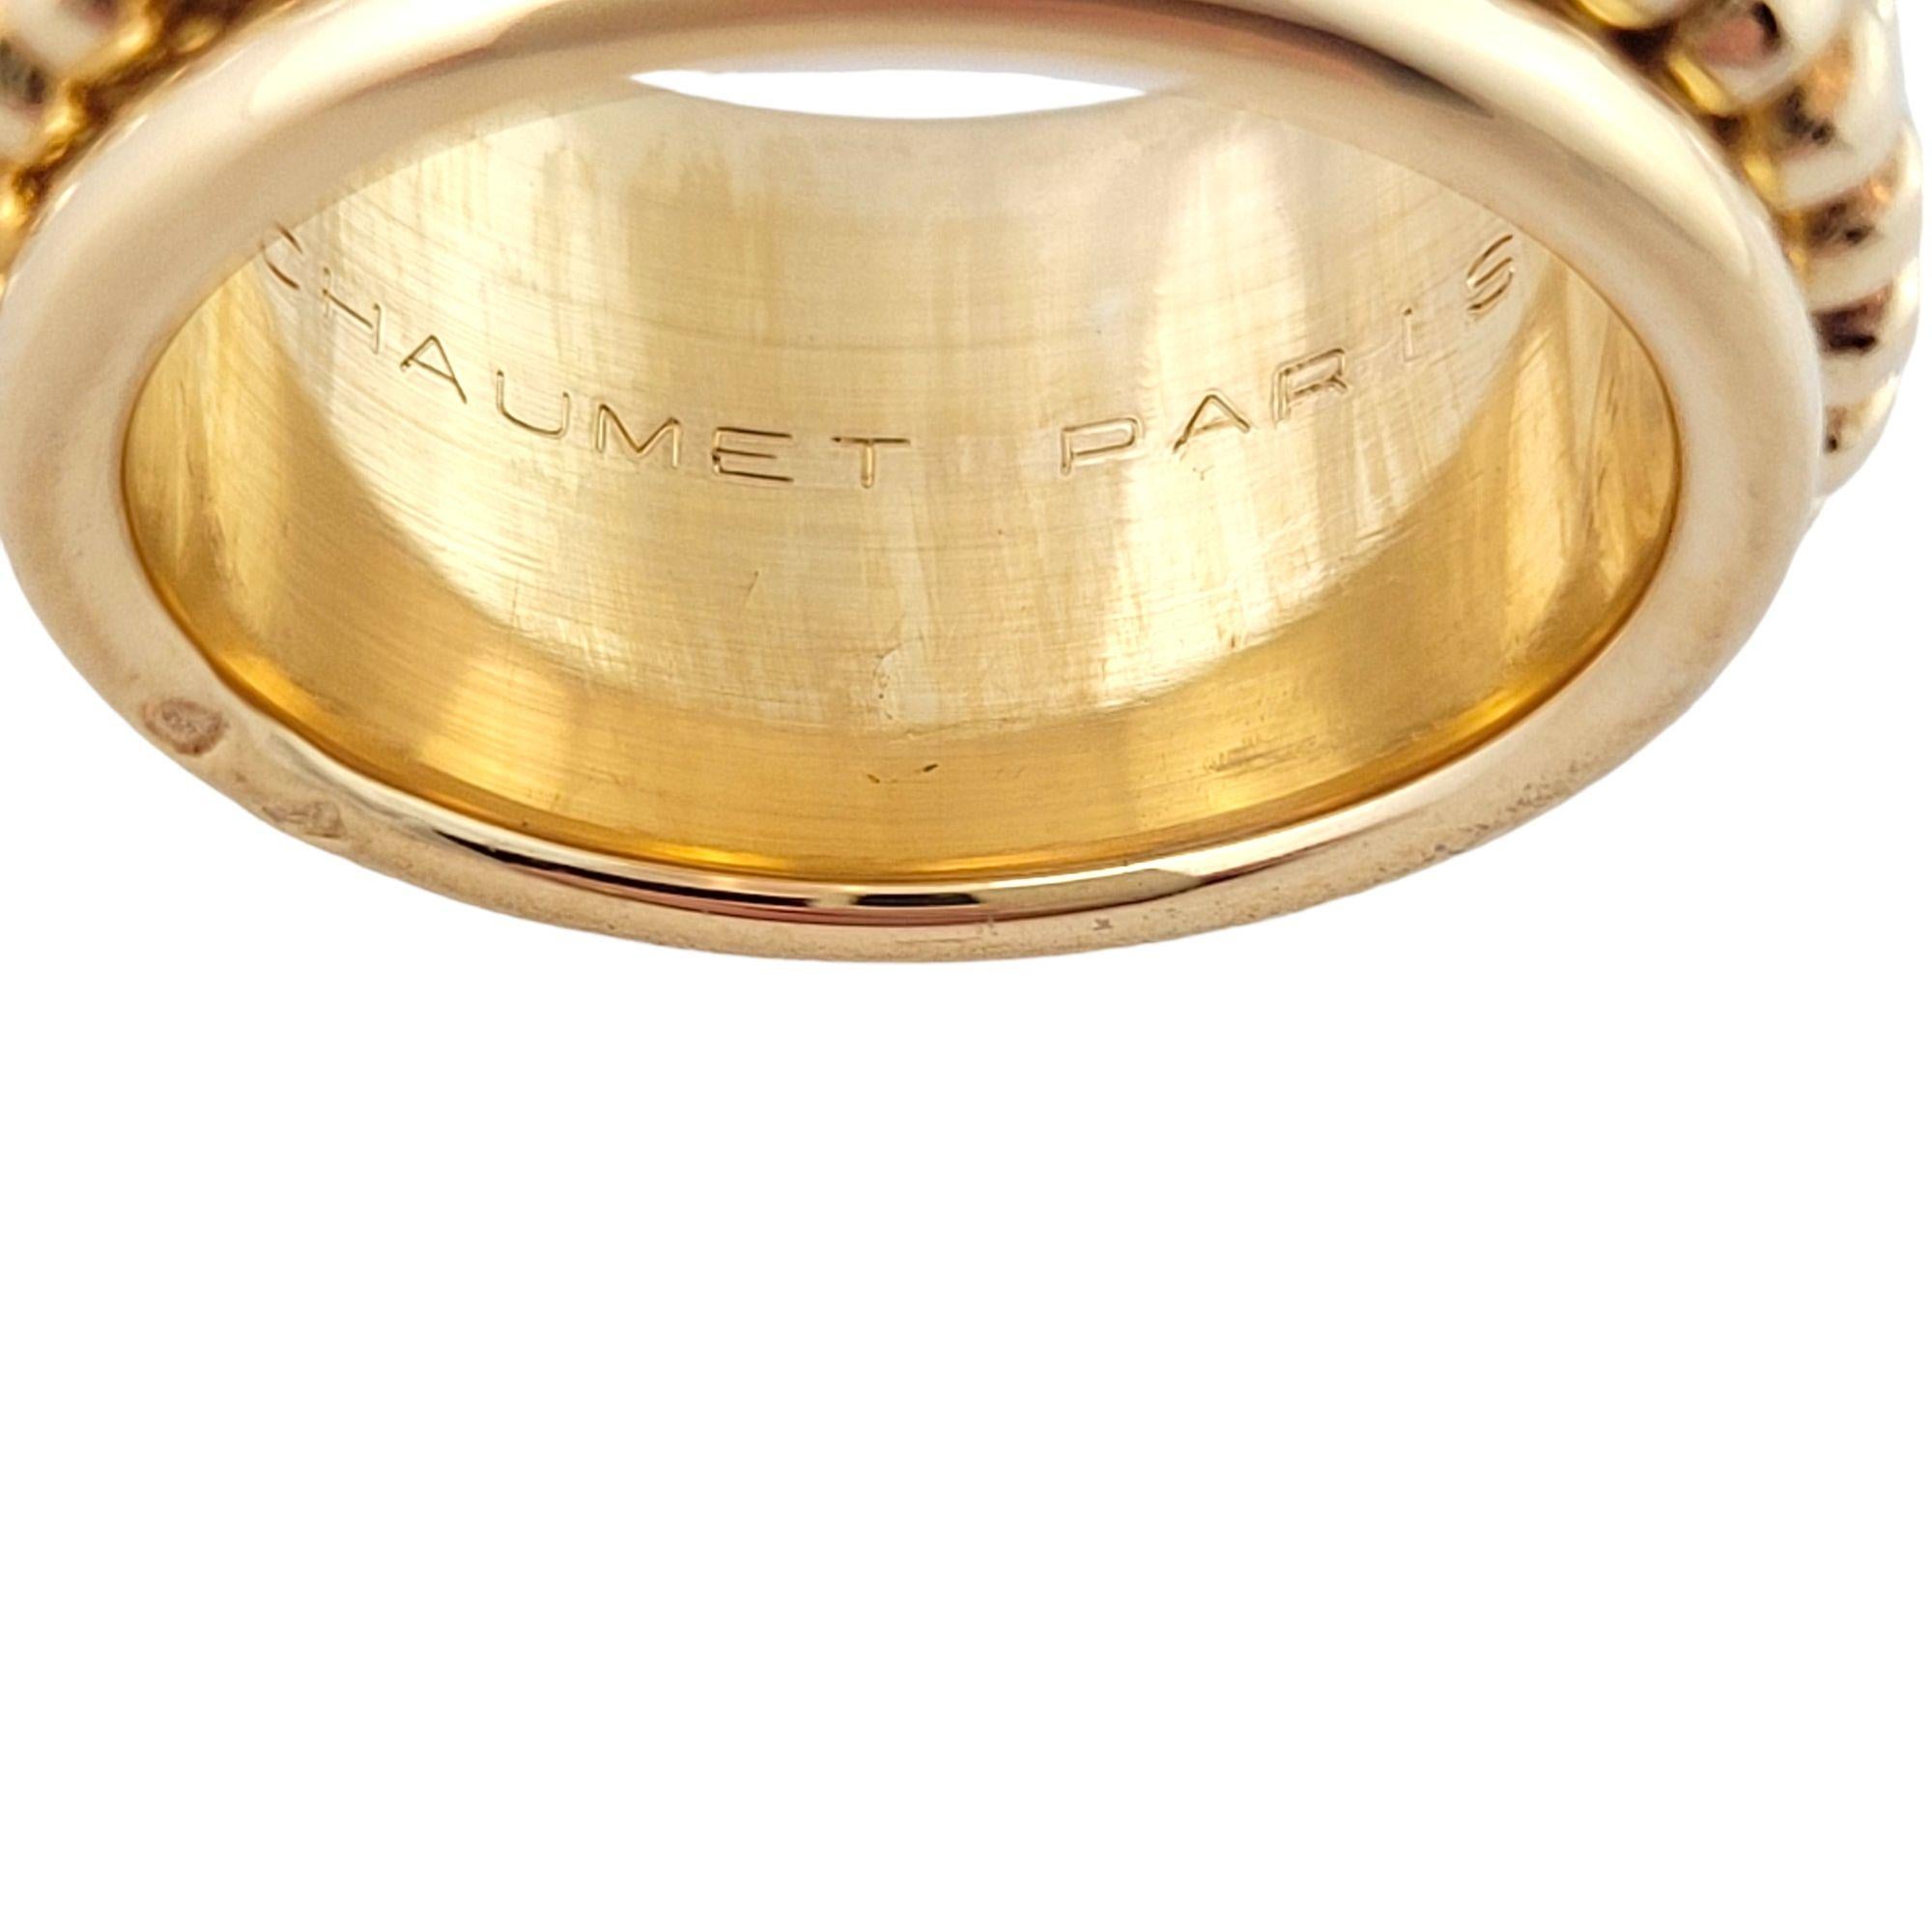 Women's Chaumet 18 Karat Yellow Gold Band Ring